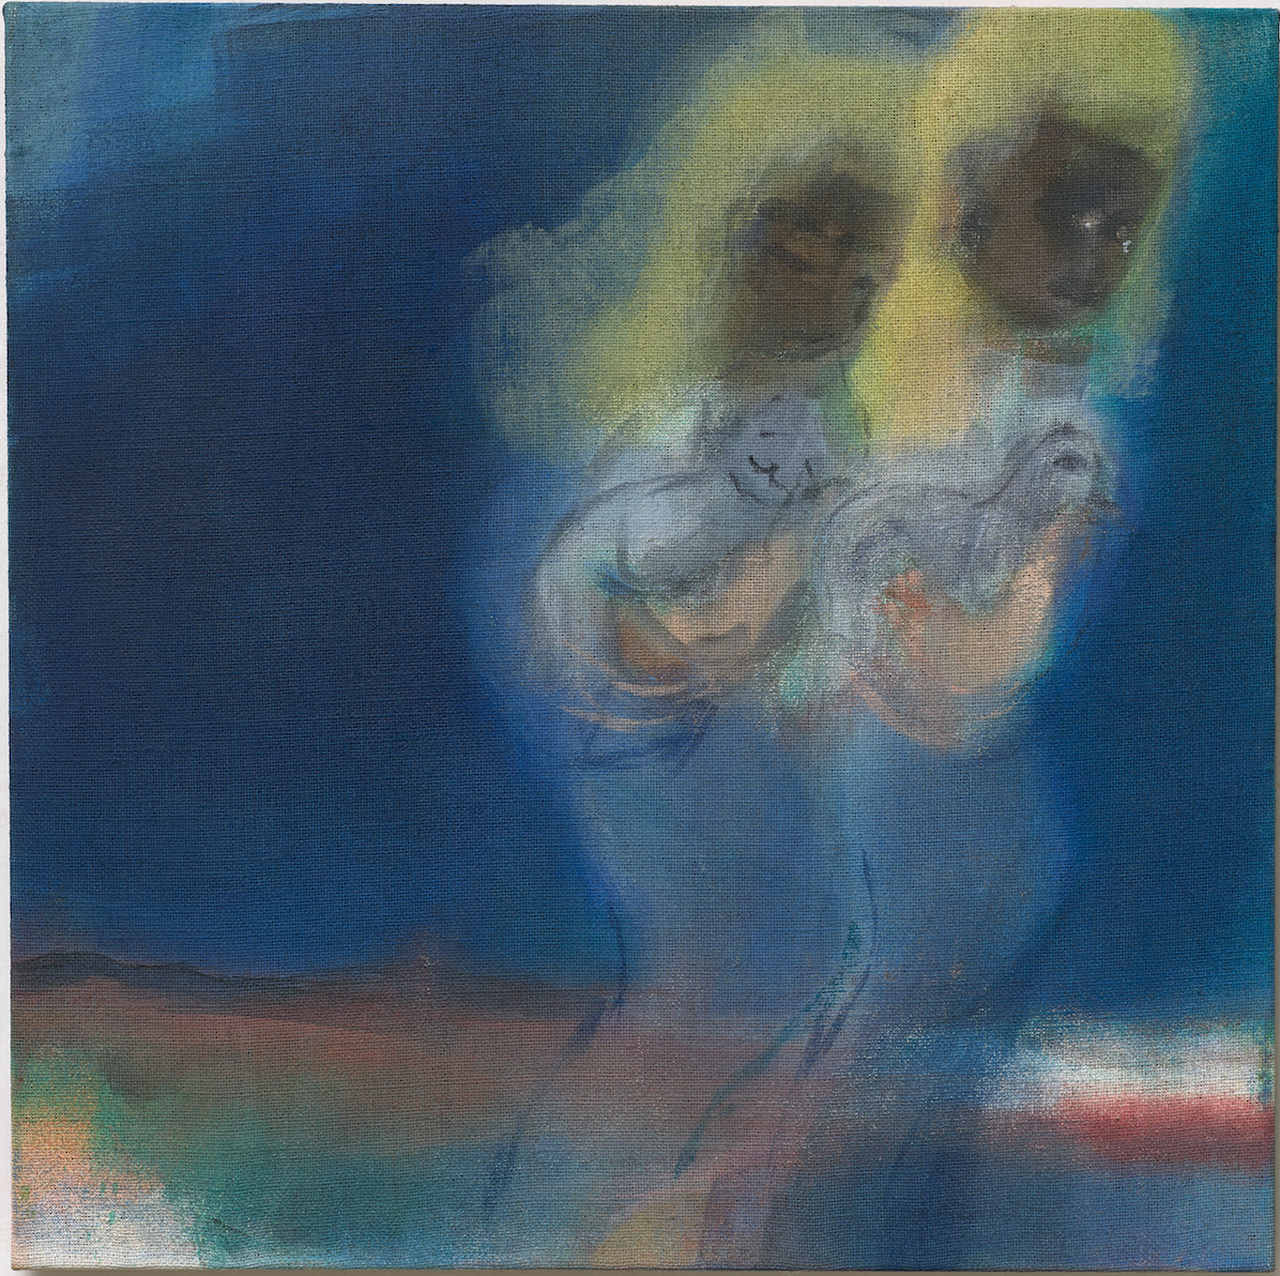 XXV. ROHKUNSTBAU Leiko Ikemura, Doppelfigur in Blau, 2000/02 Öl auf Jute, 70 x 70 cm © Leiko Ikemura und VG Bild-Kunst, 2020